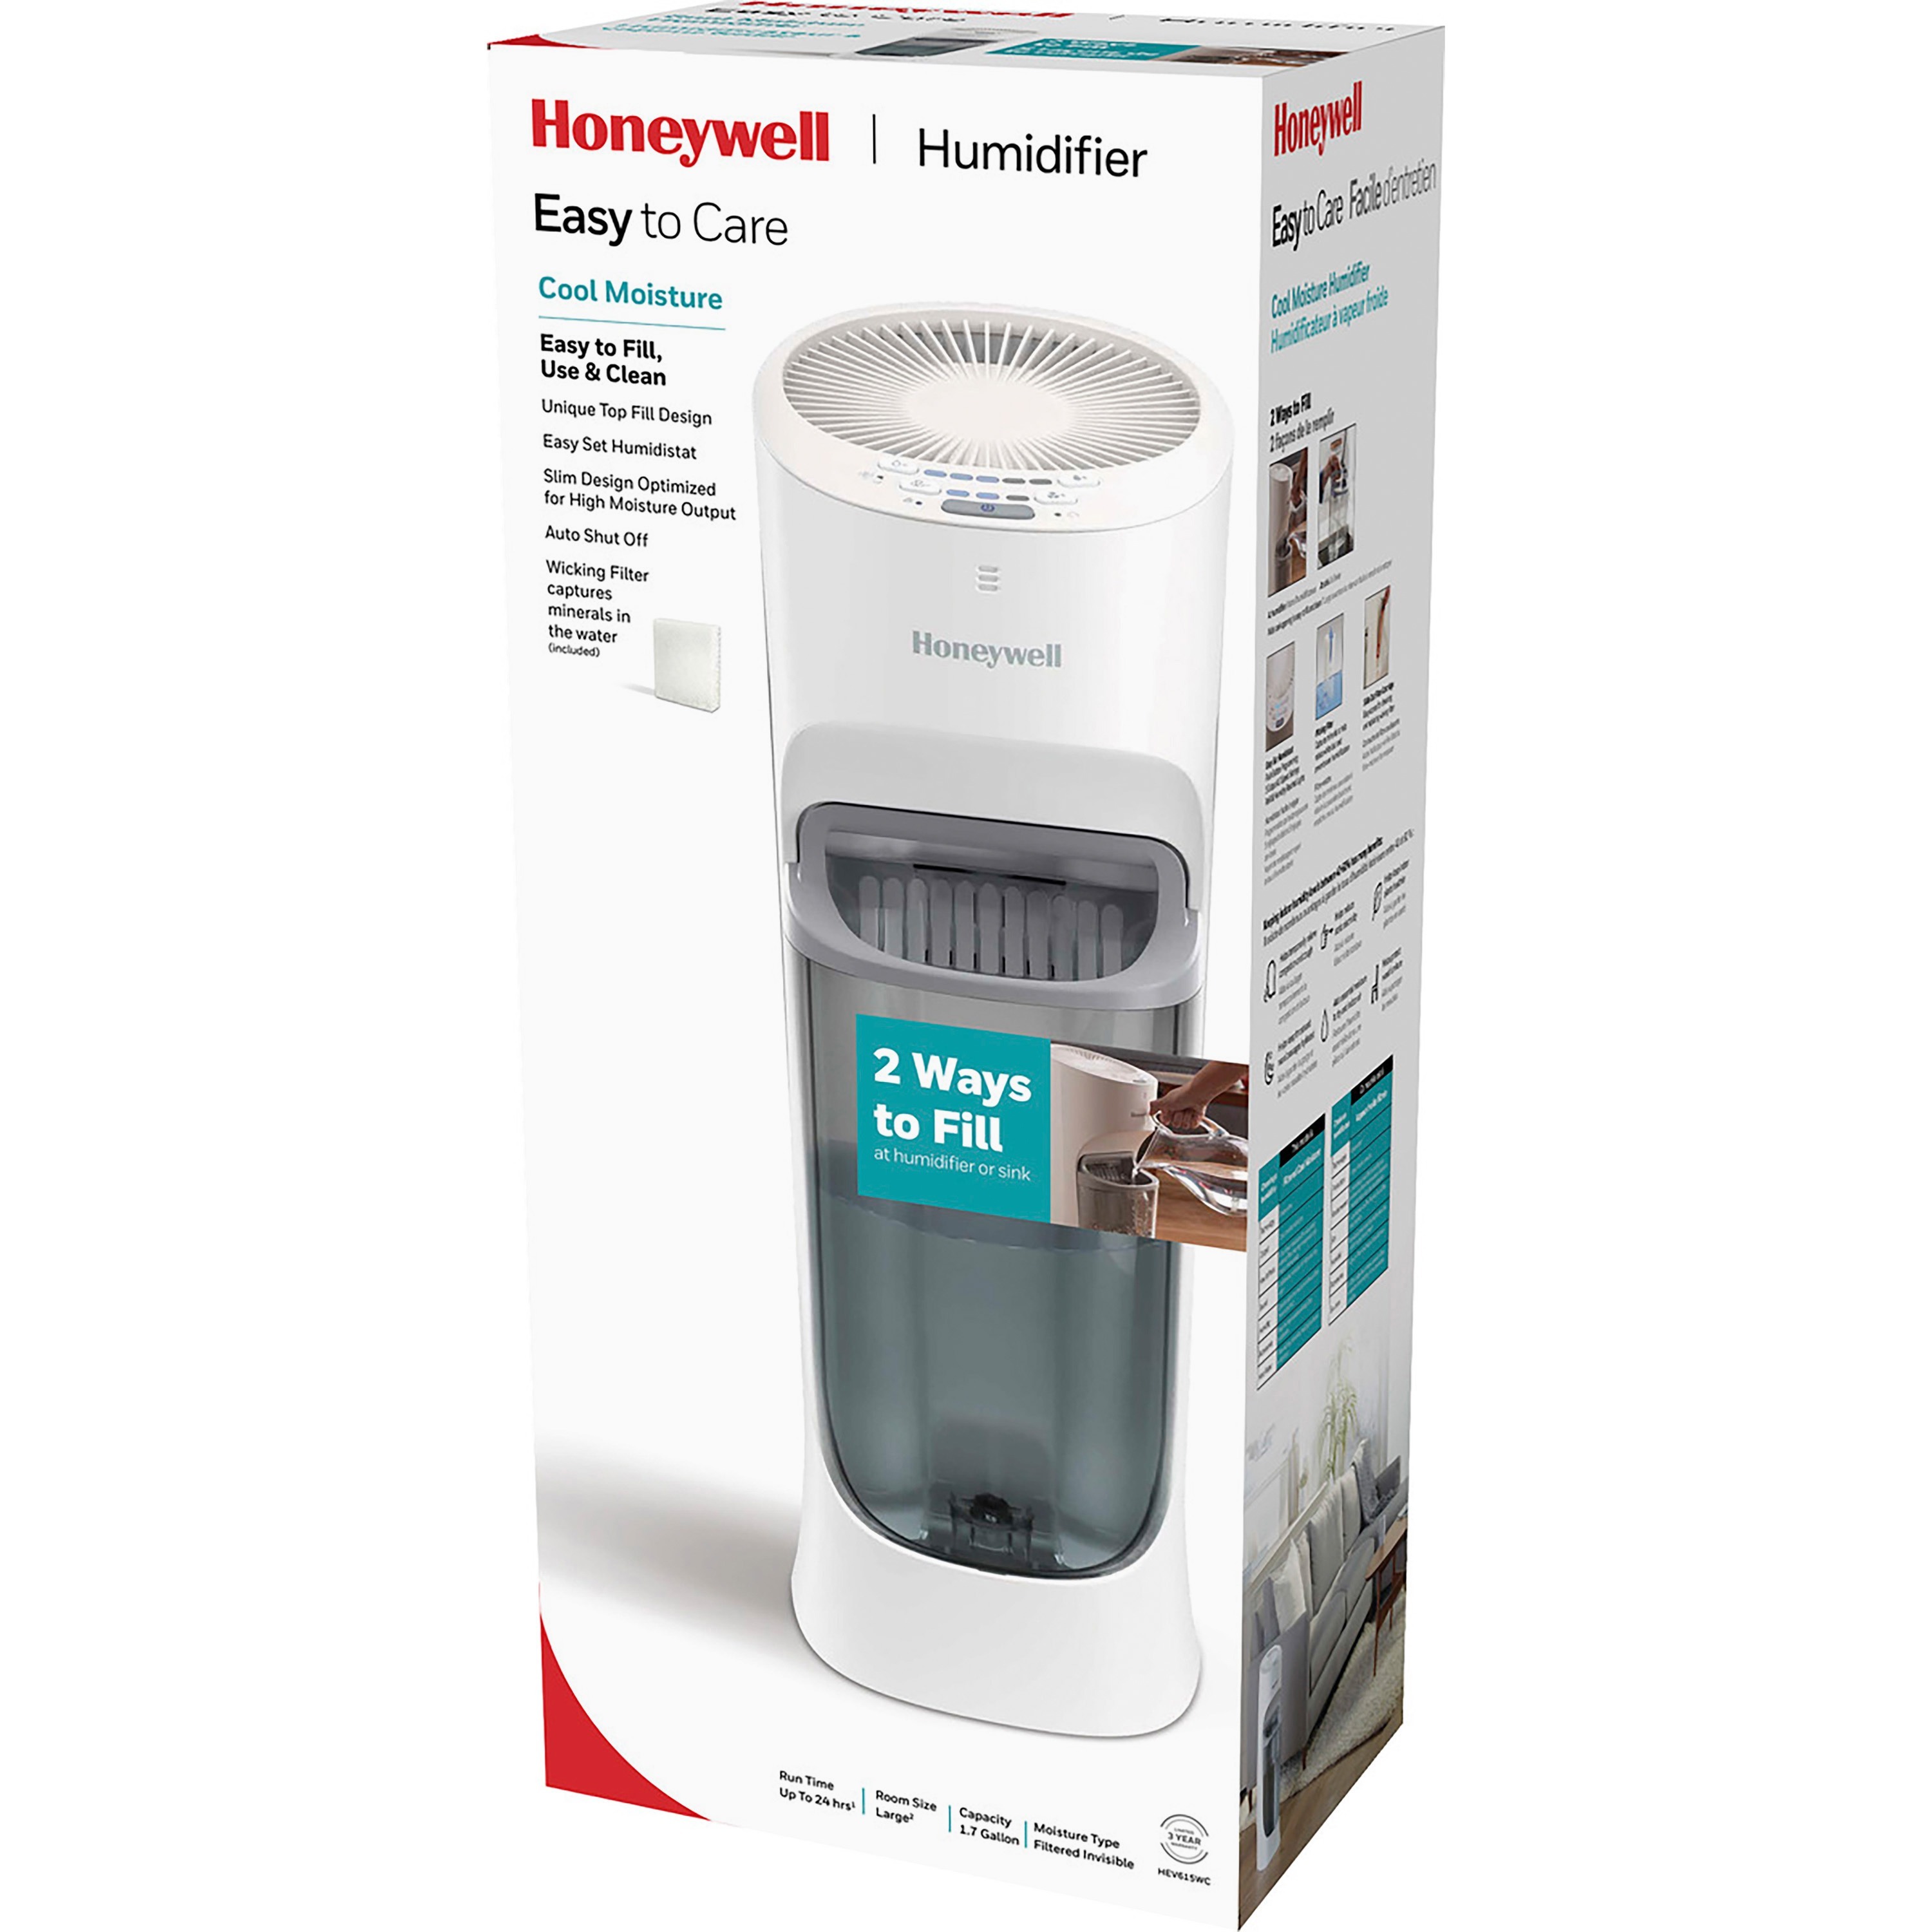 Cool Mist Top Fill Tower Humidistat Auto-Off Honeywell Air Humidifier 1.5 Gal 